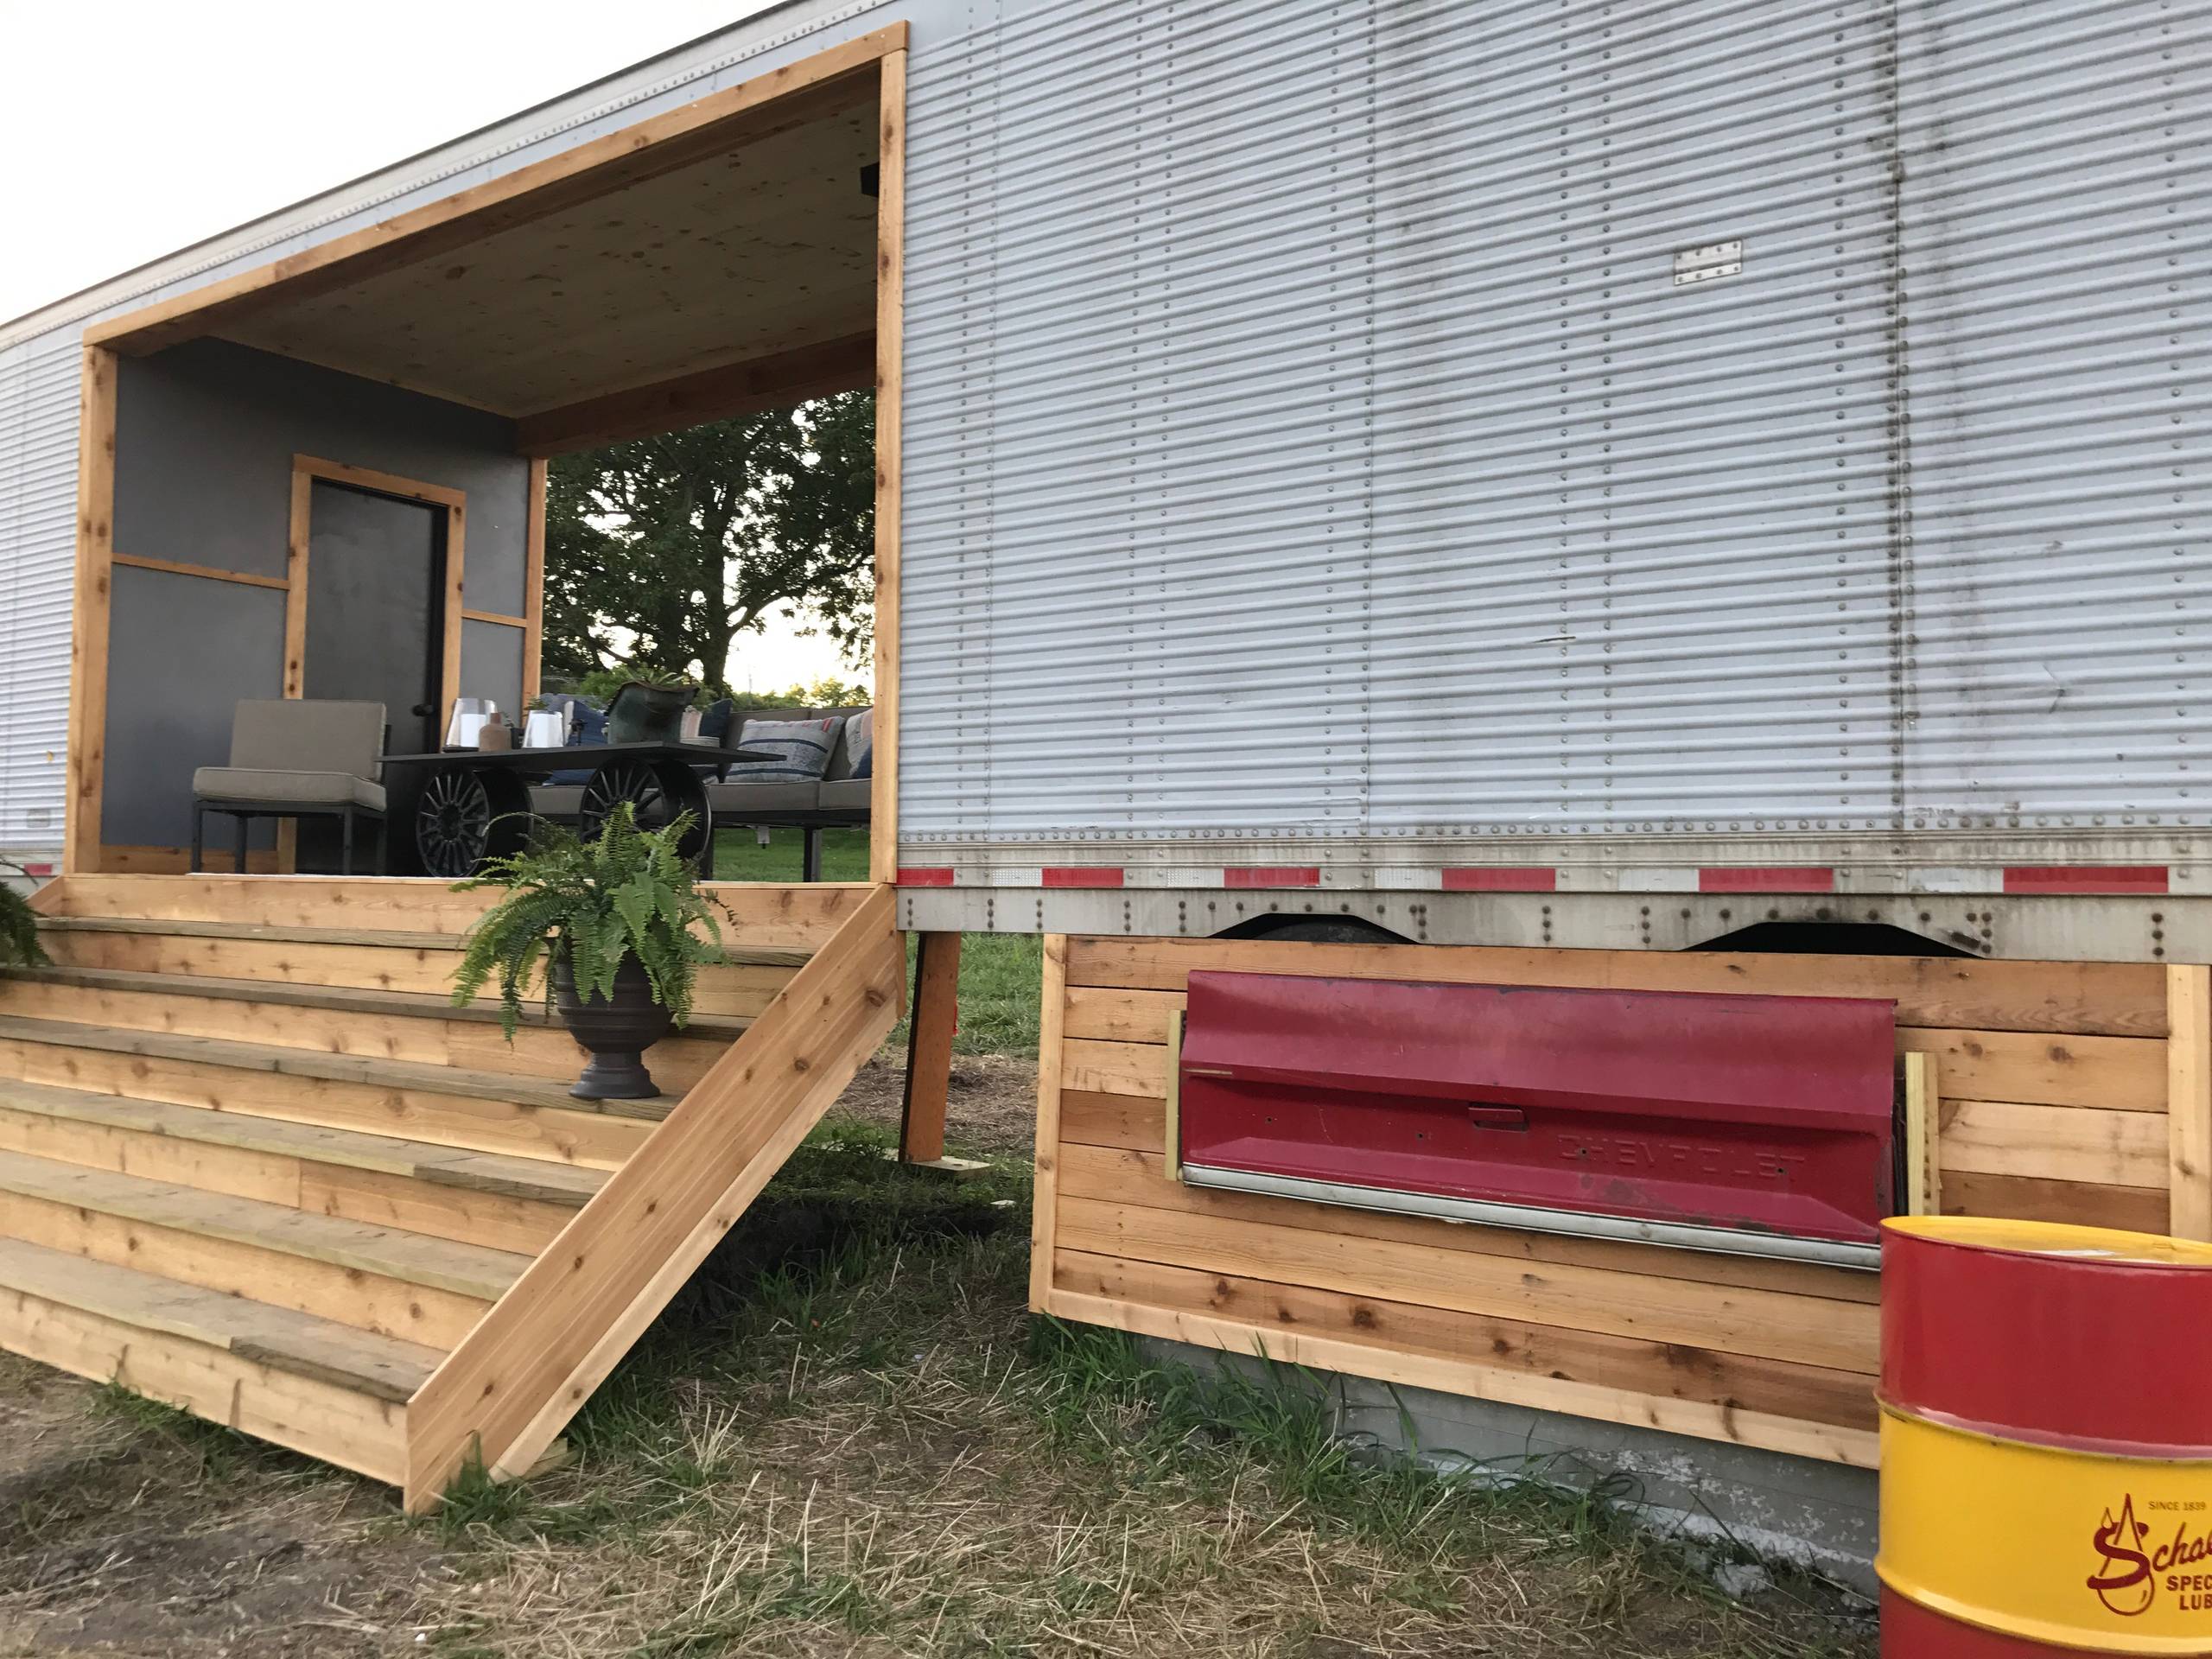 Vintage semi trailer reno turned tiny home